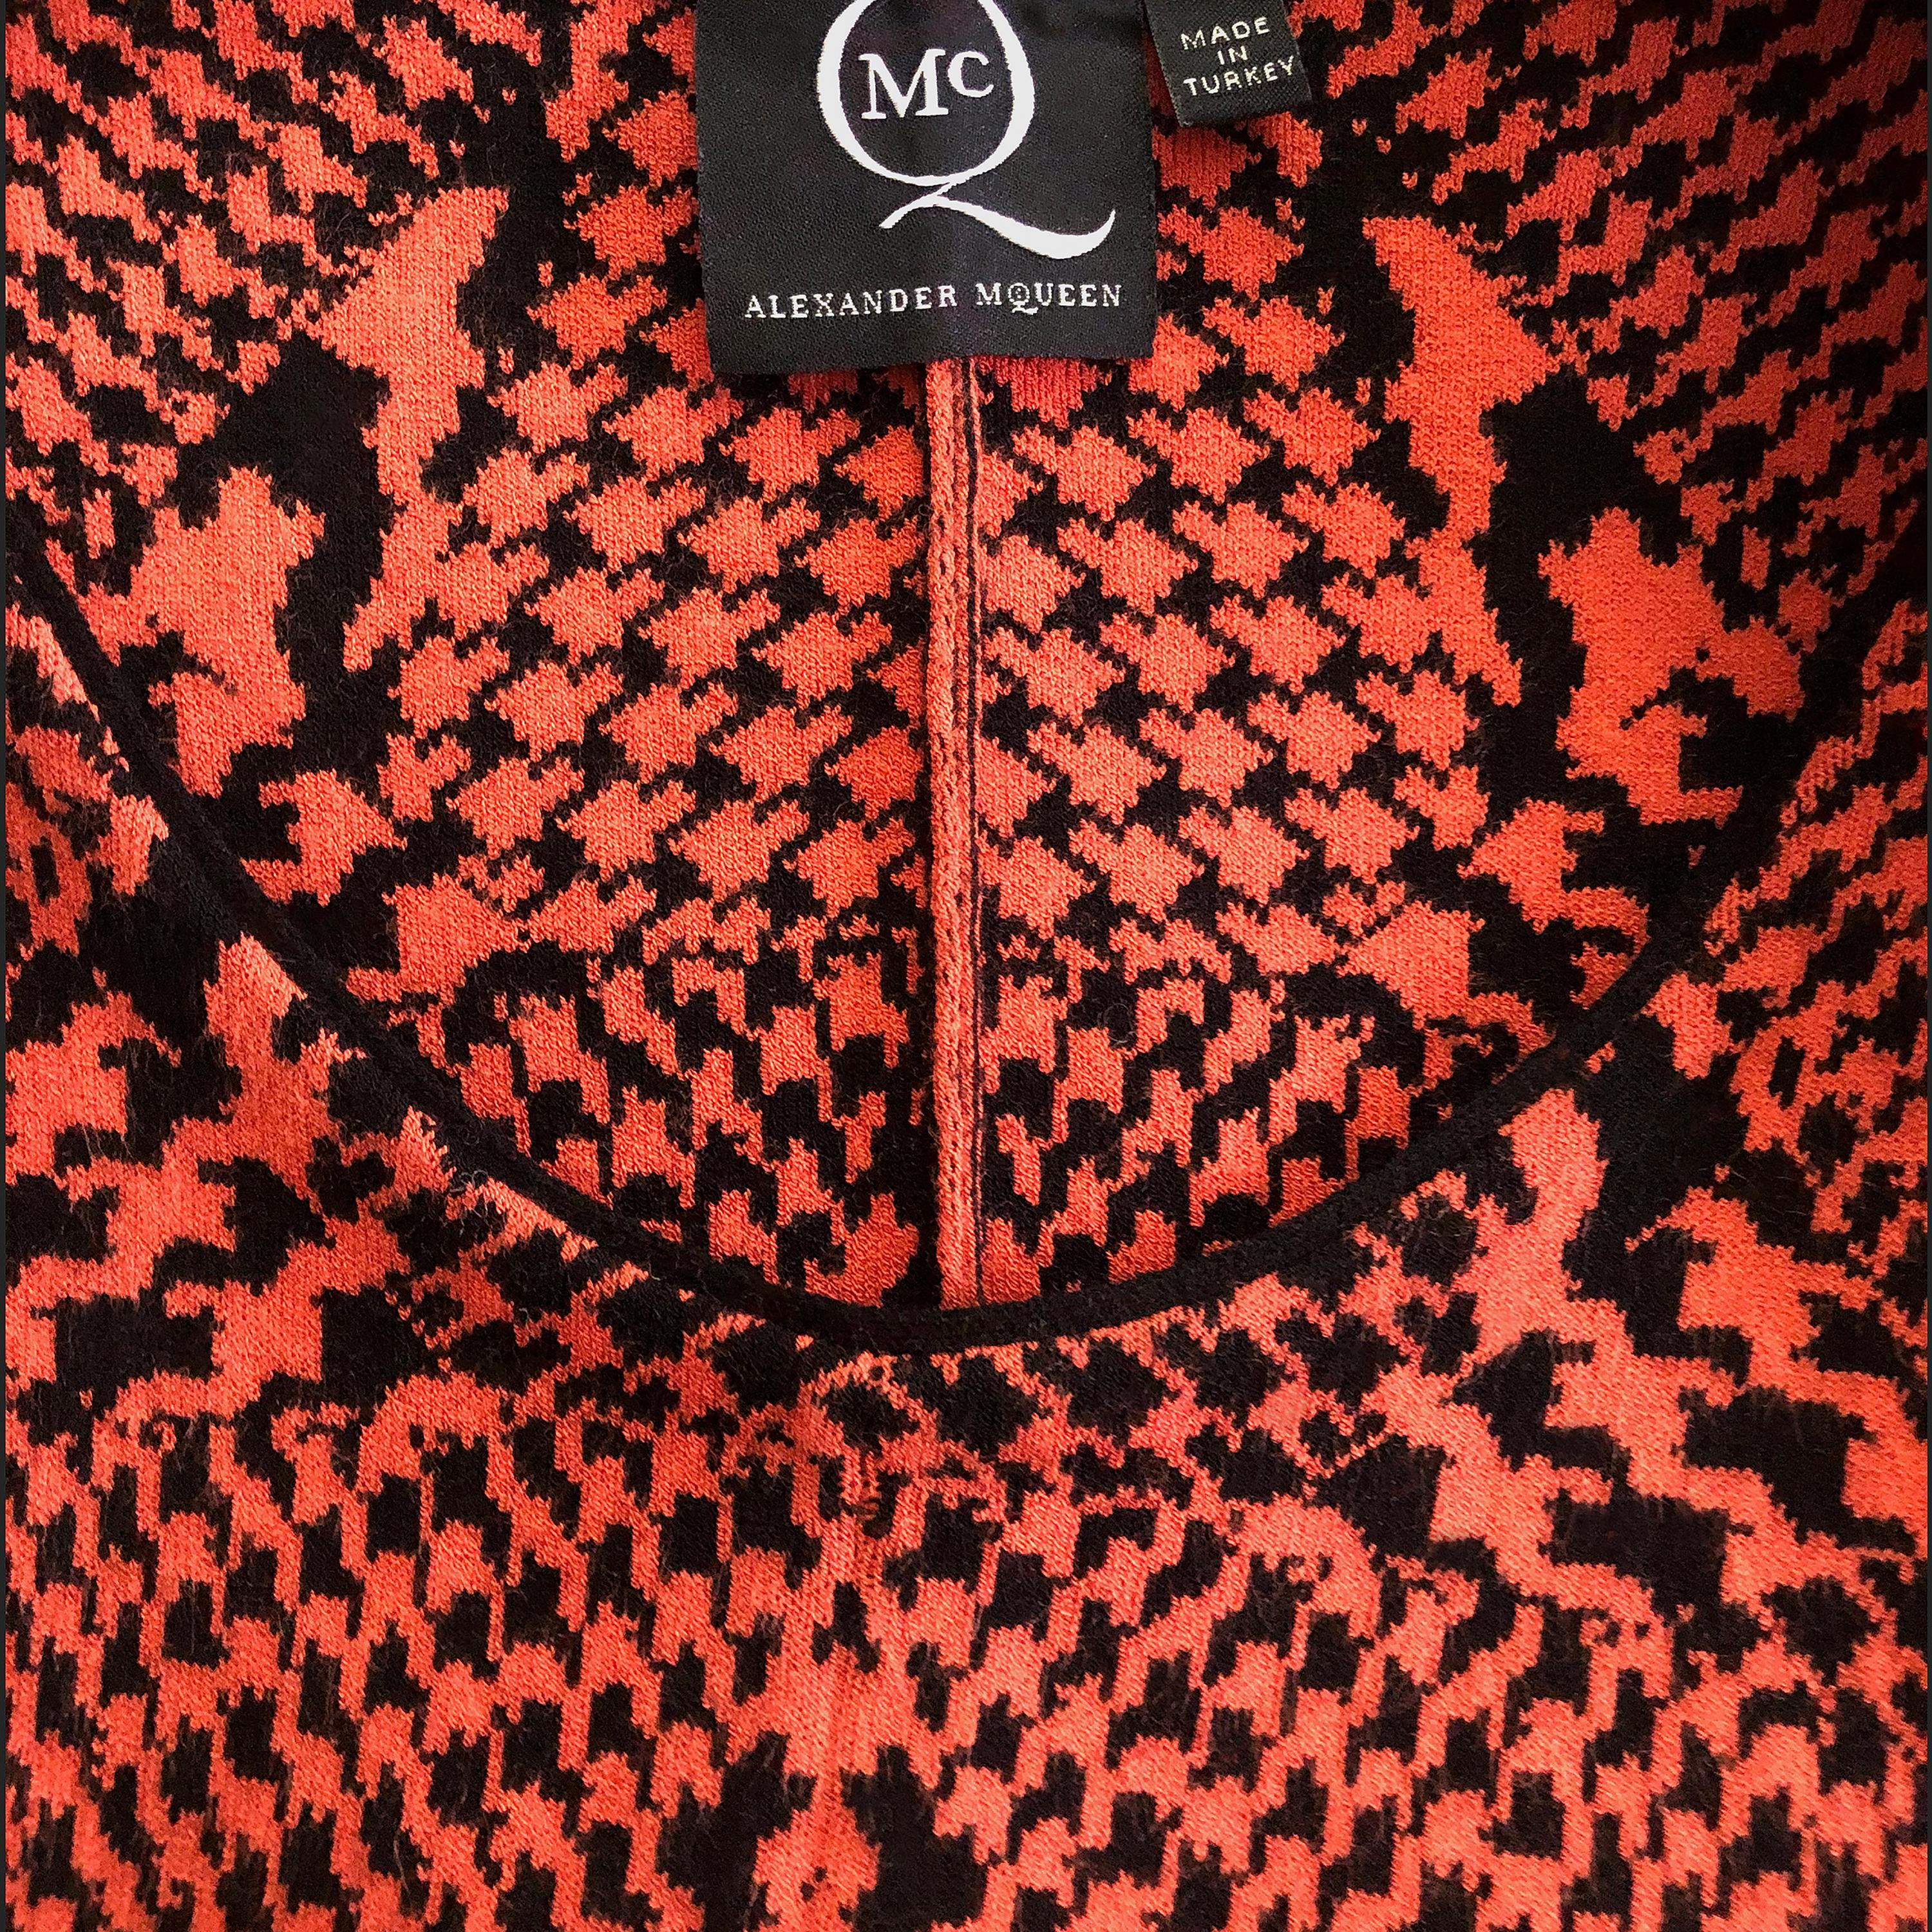 Alexander McQueen Dress - Multi Dogtooth Knit - Burnt Orange + Black For Sale 2